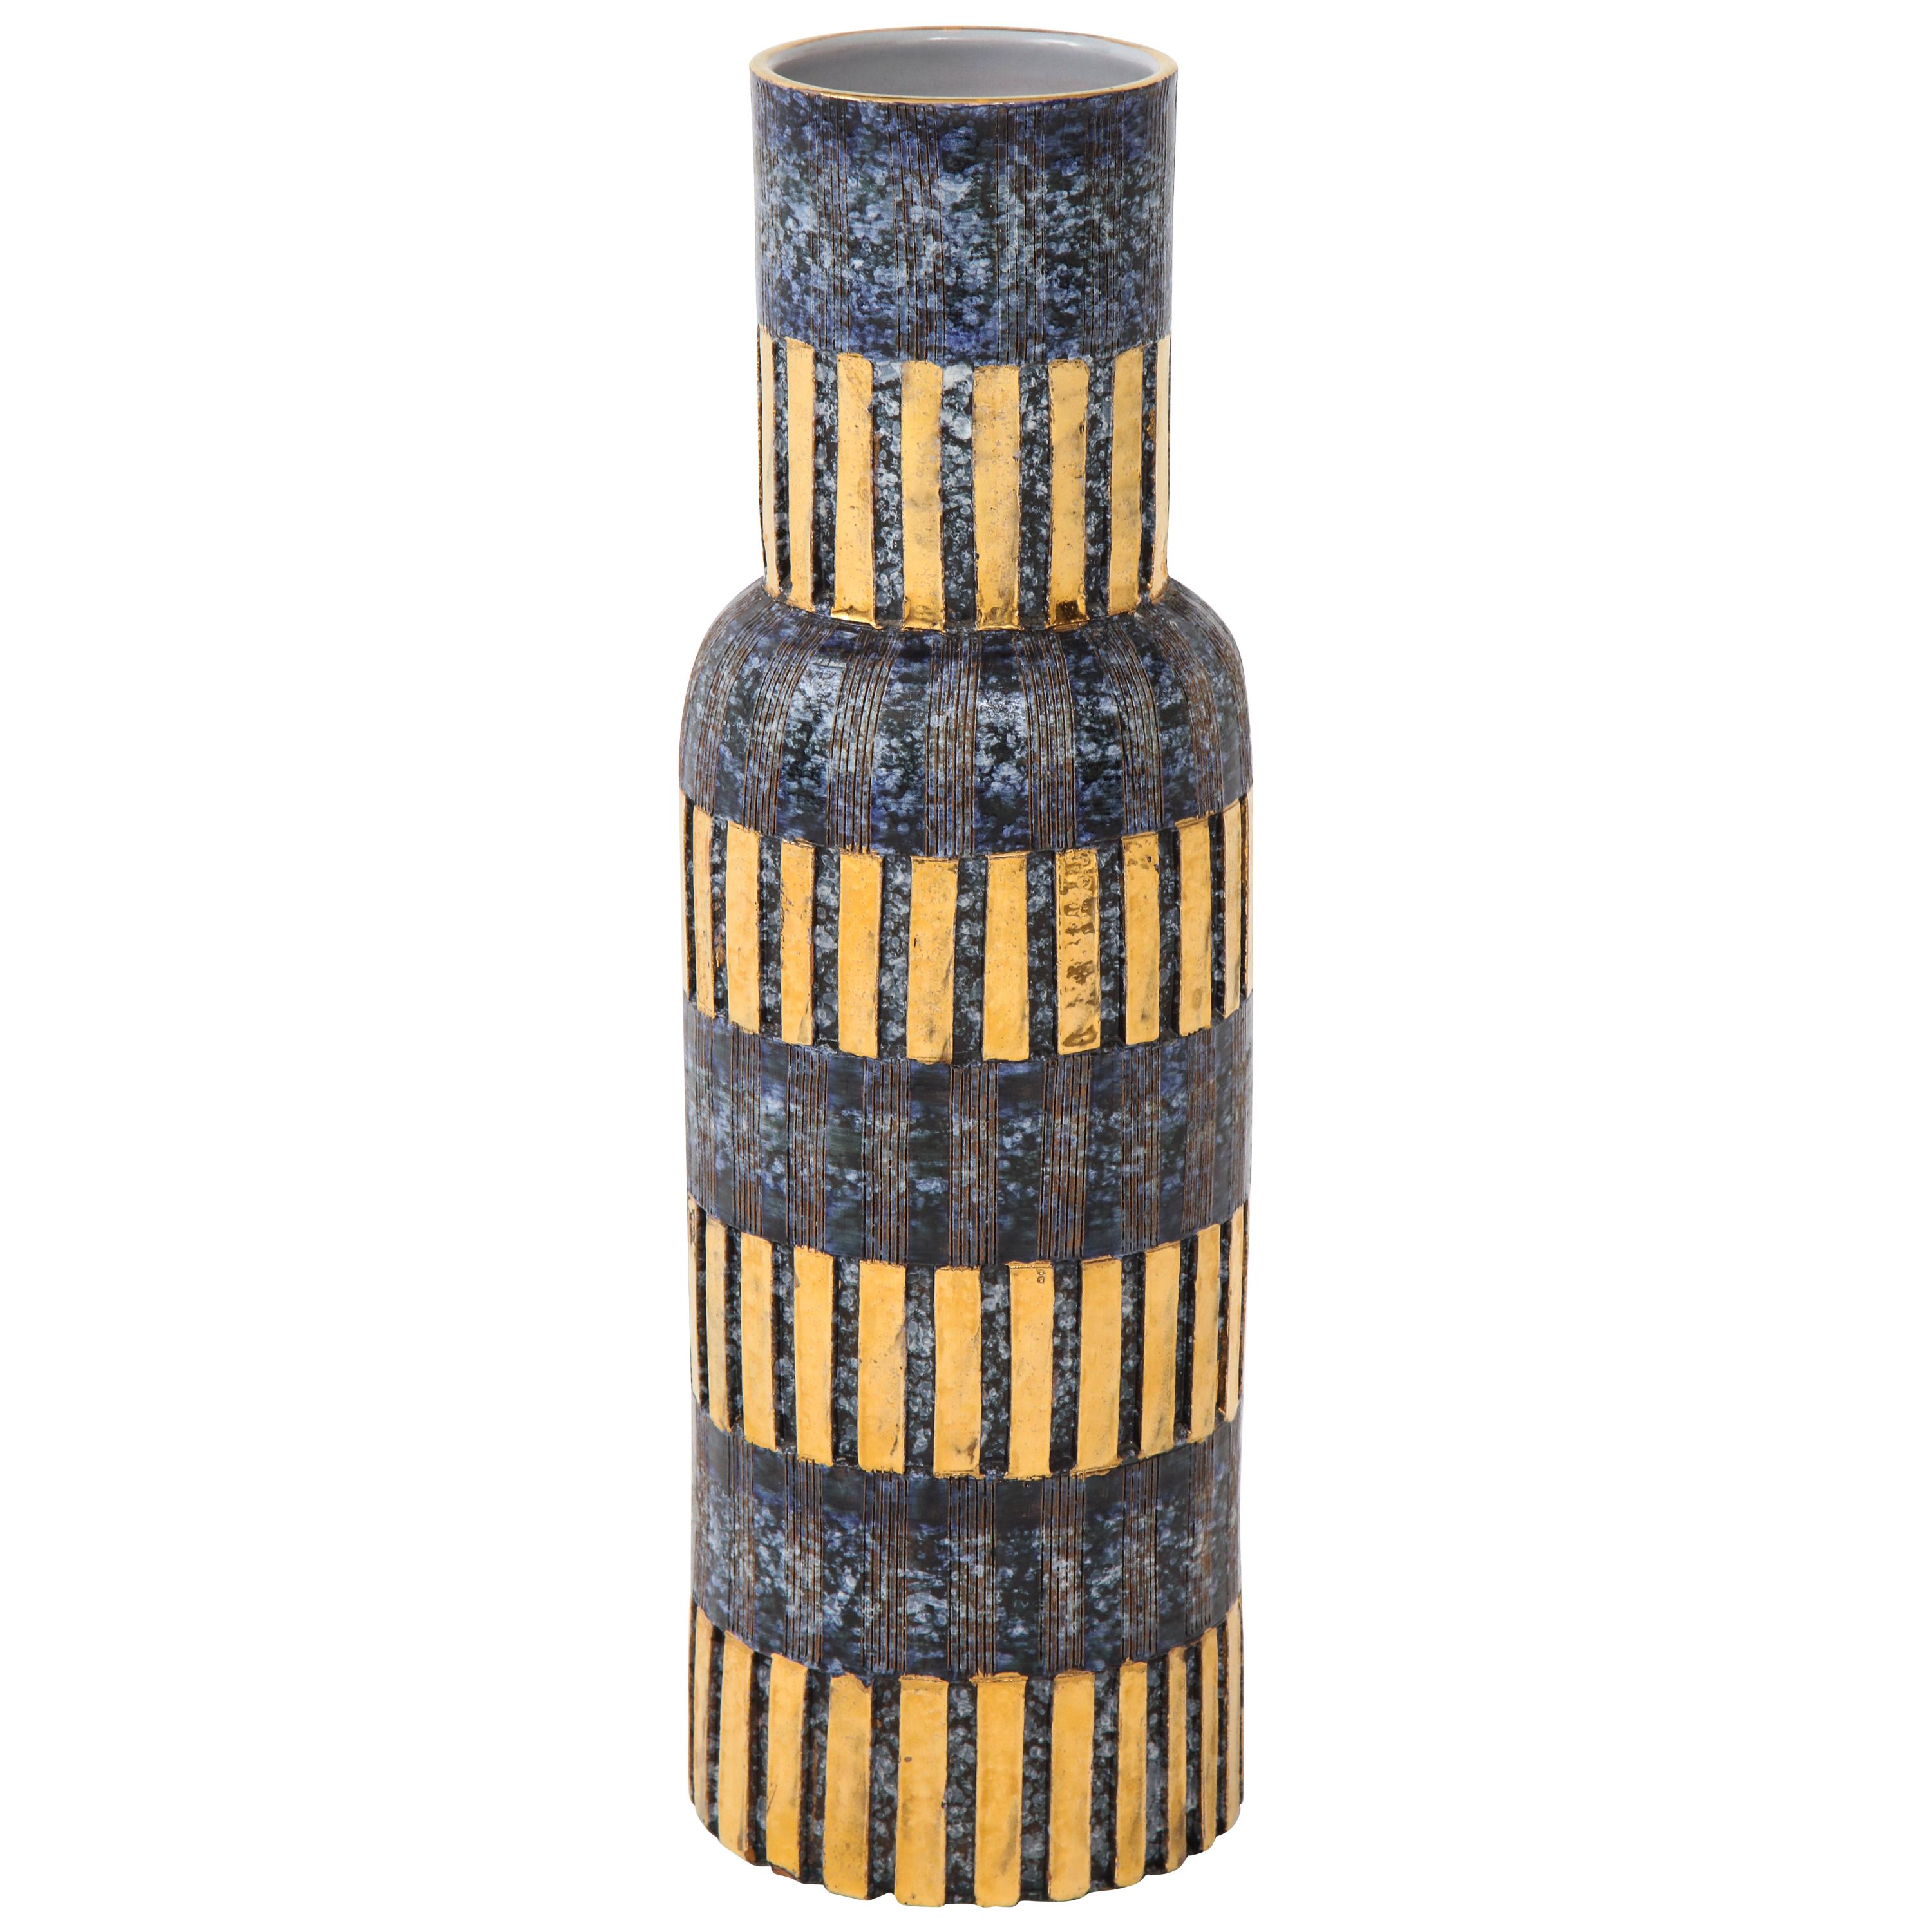 Aldo Londi, Bitossi Blue and Gold Ceramic Vase